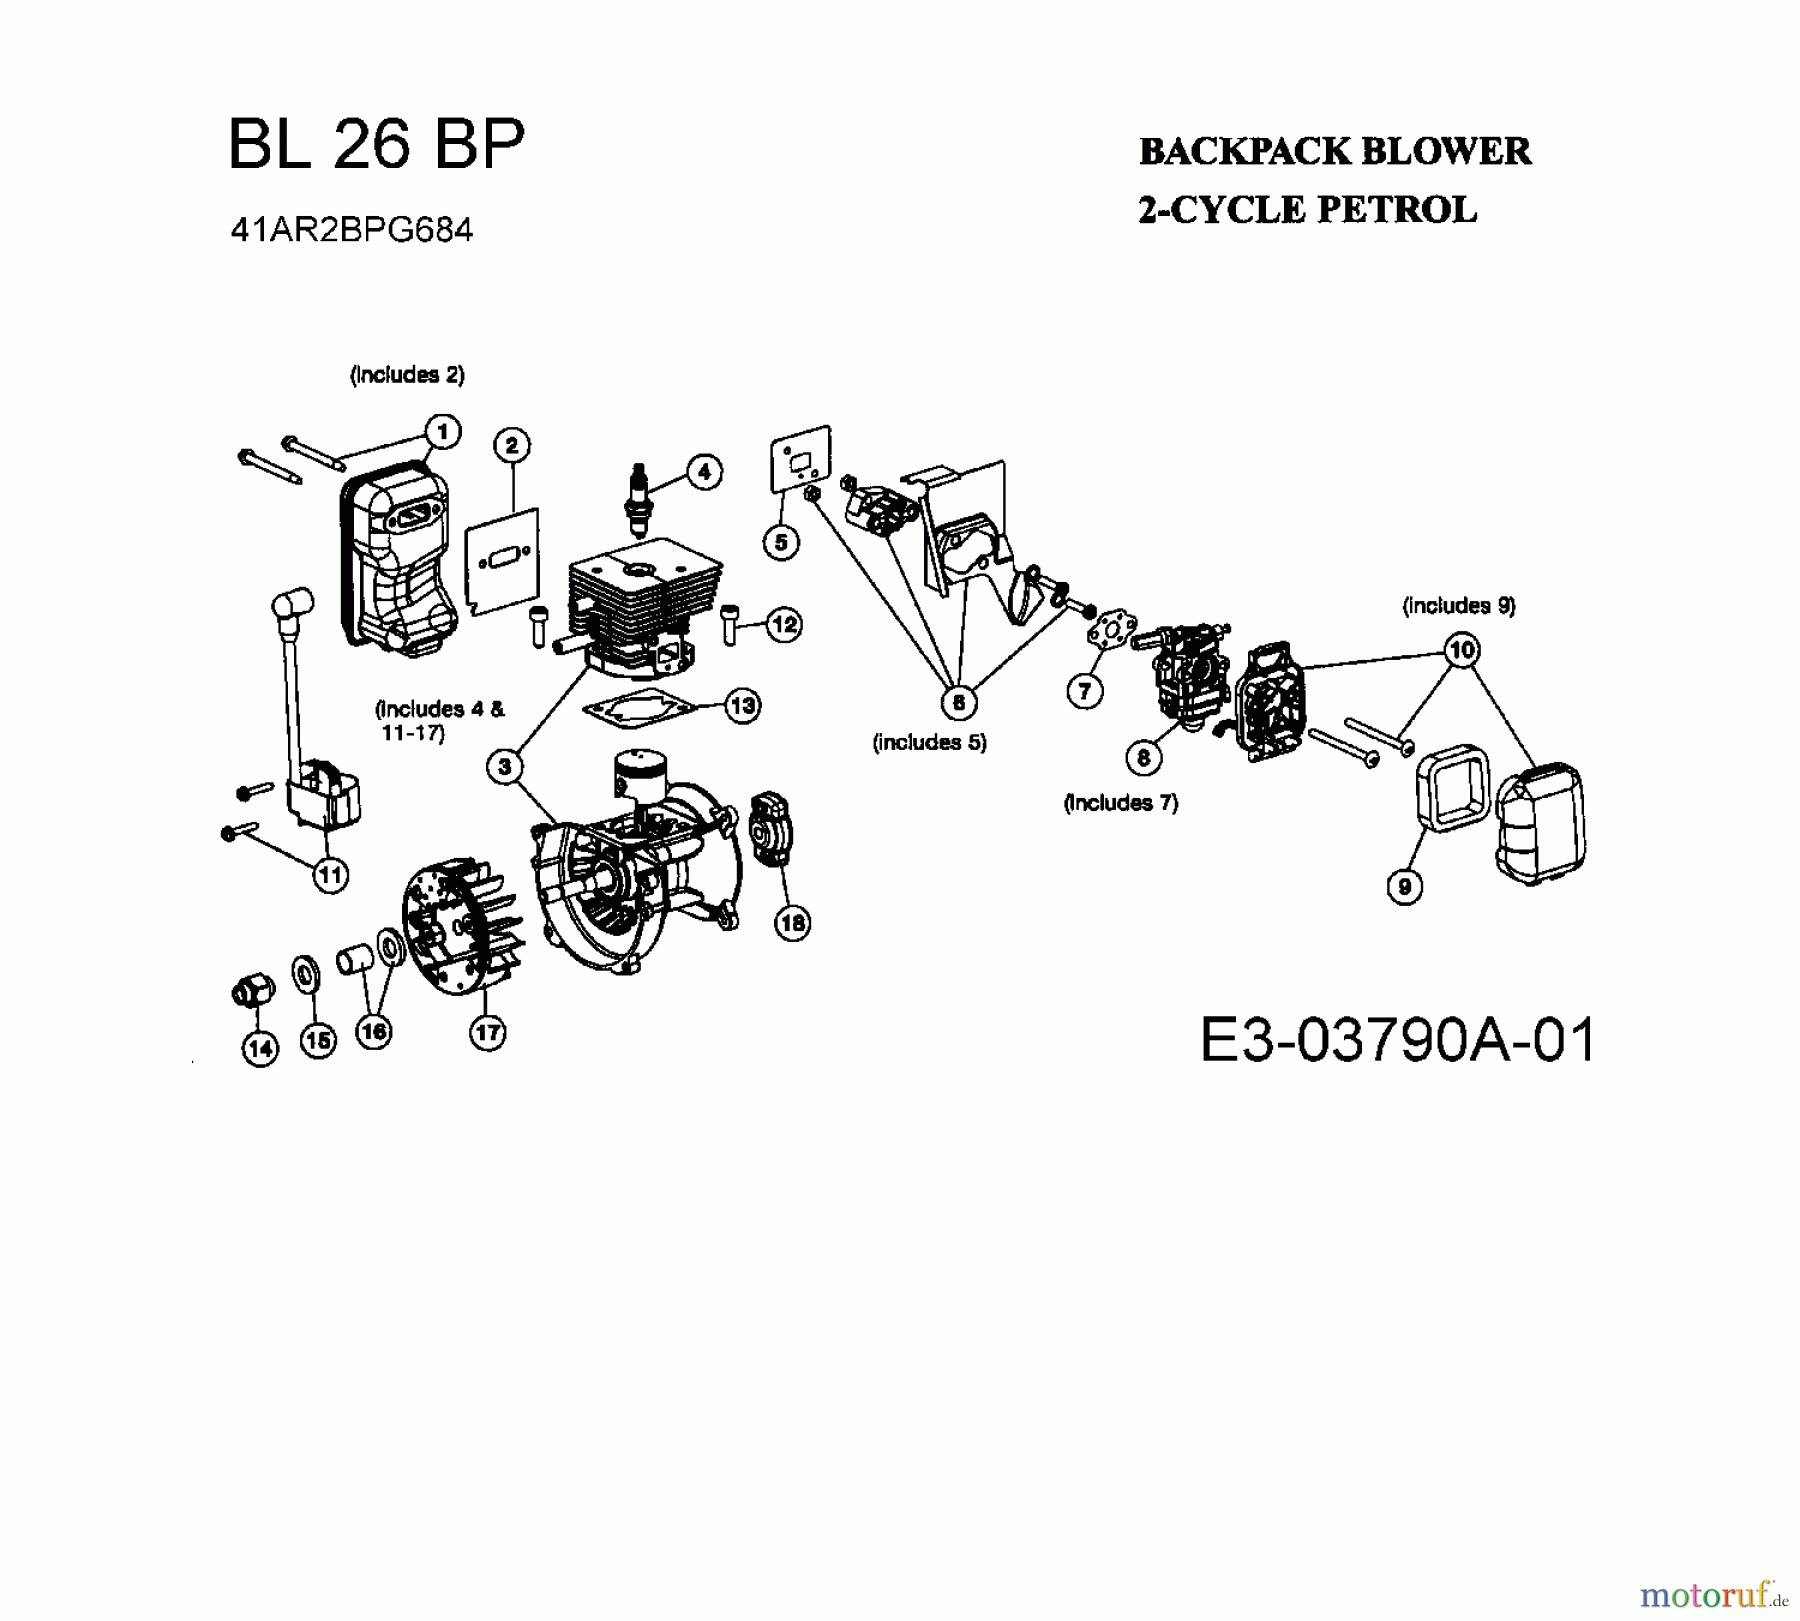  Bolens Leaf blower, Blower vac BL 26 BP 41AR2BPG684  (2008) Engine